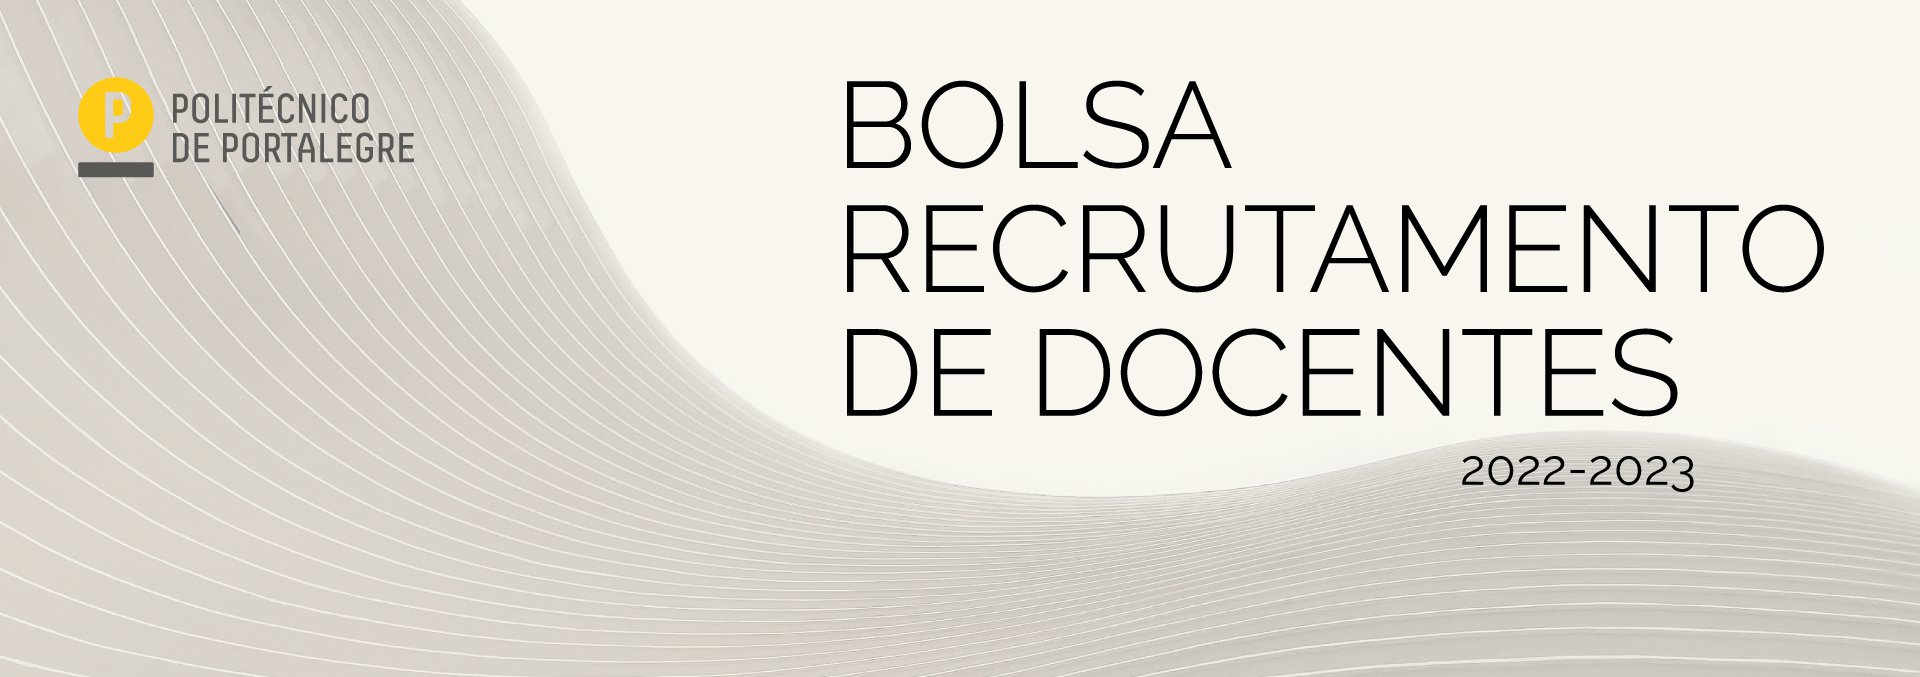 BOLSAS DE RECRUTAMENTO DE DOCENTES 2022/23